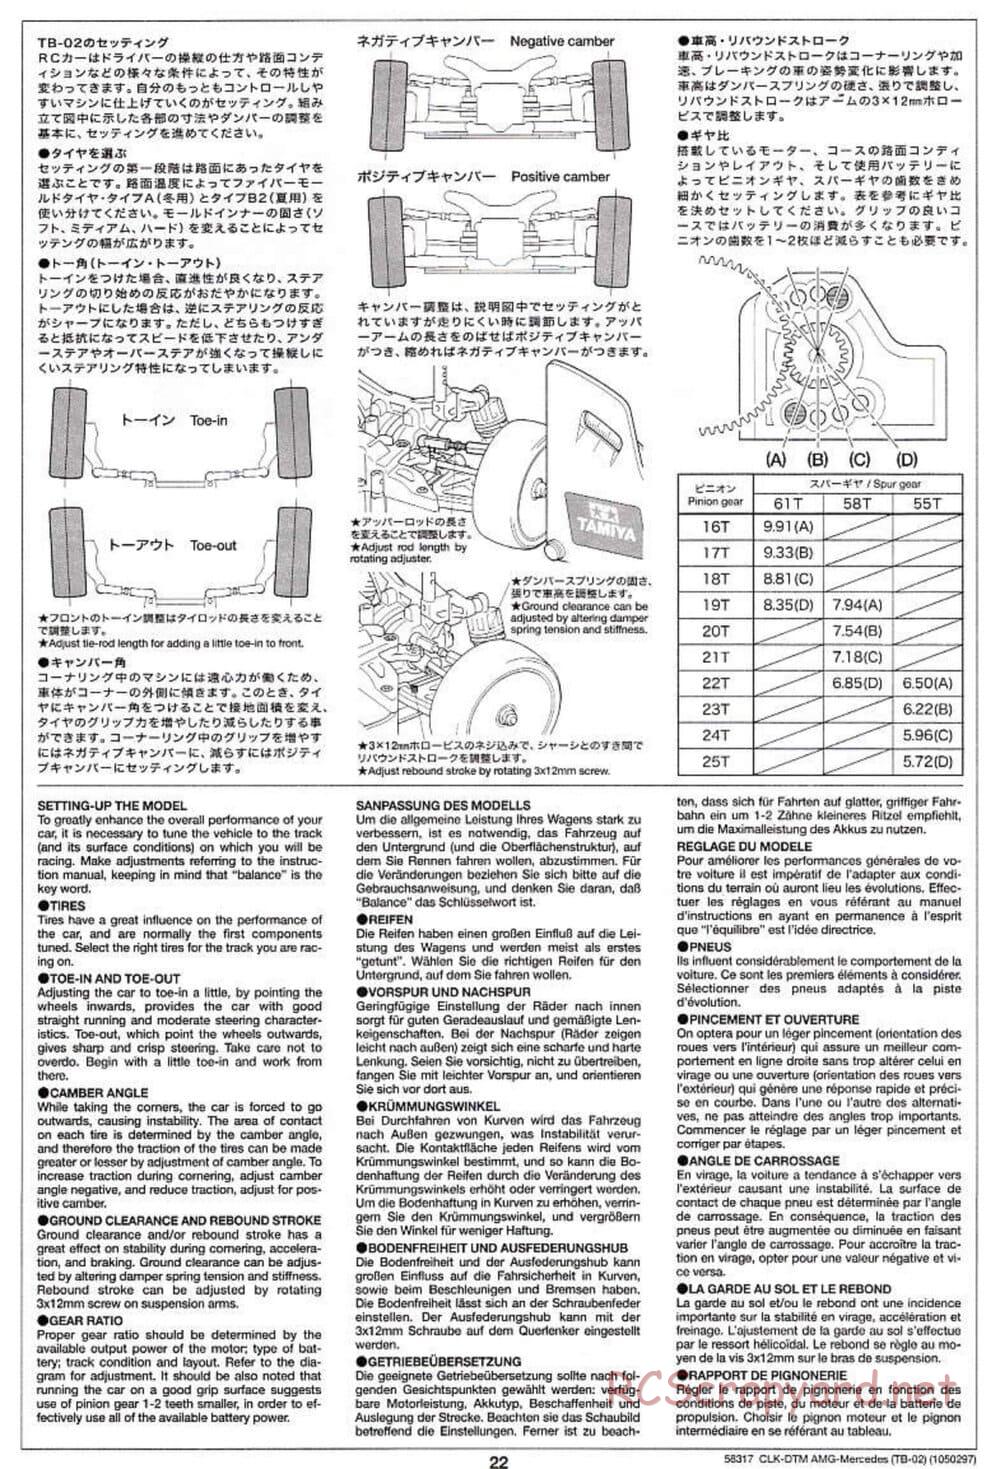 Tamiya - CLK DTM 2002 AMG Mercedes - TB-02 Chassis - Manual - Page 22